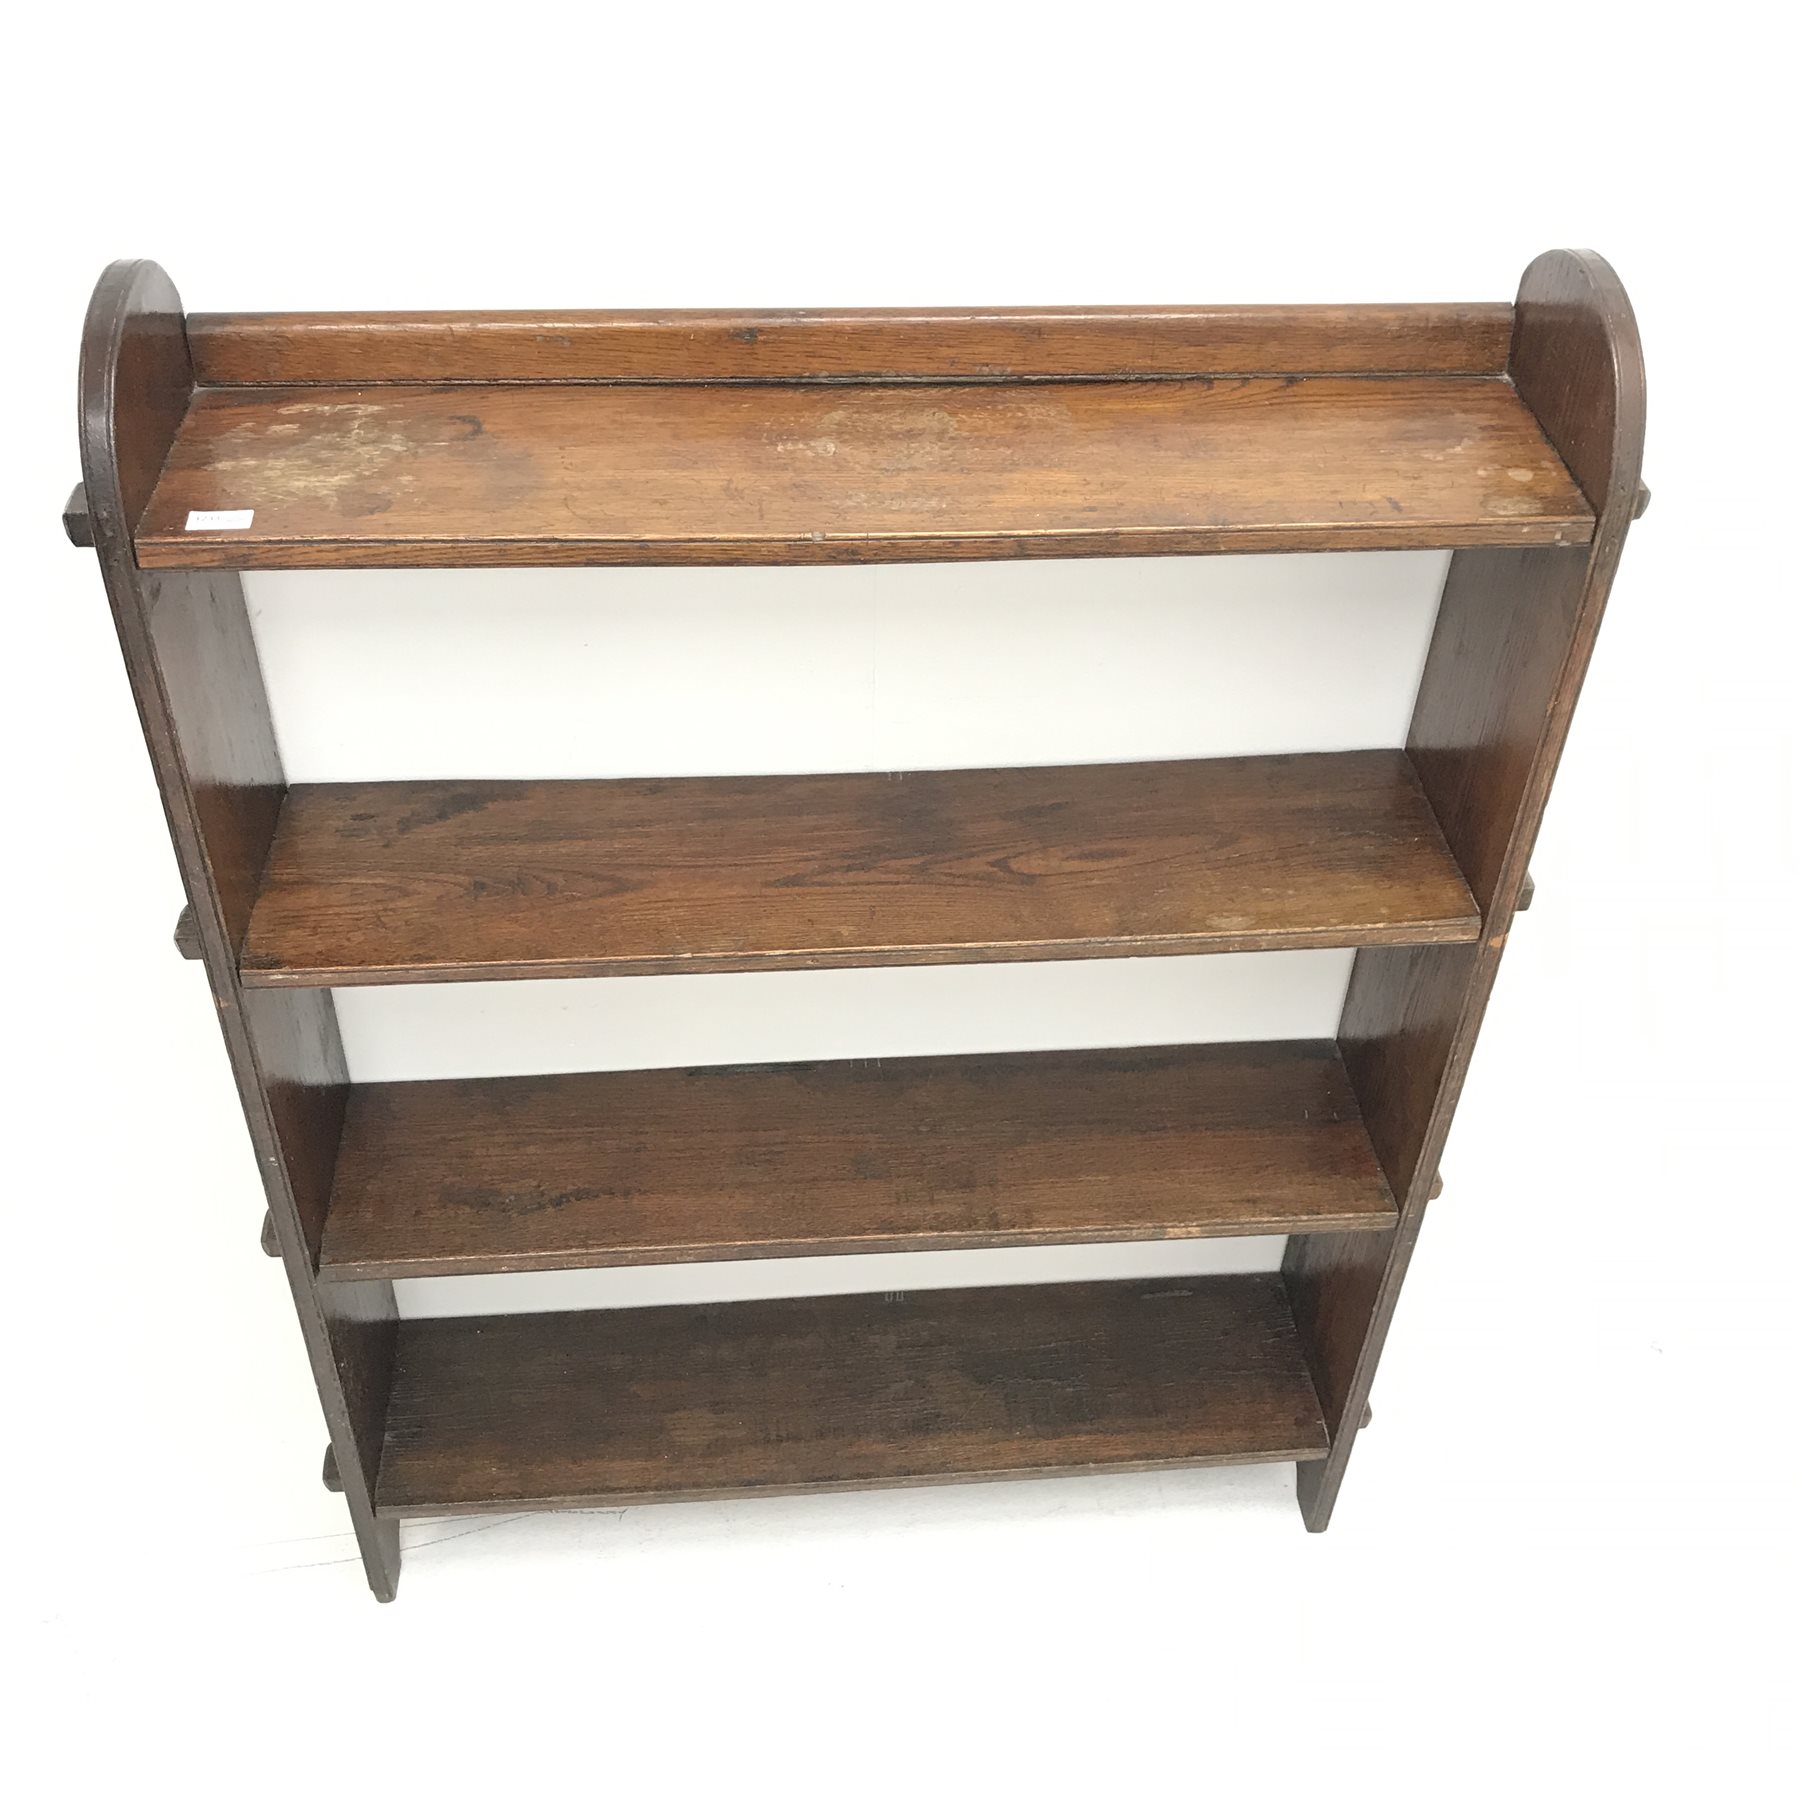 Early 20th century oak open bookcase, four pegged shelves, W104cm, H131cm, D23cm - Image 3 of 3